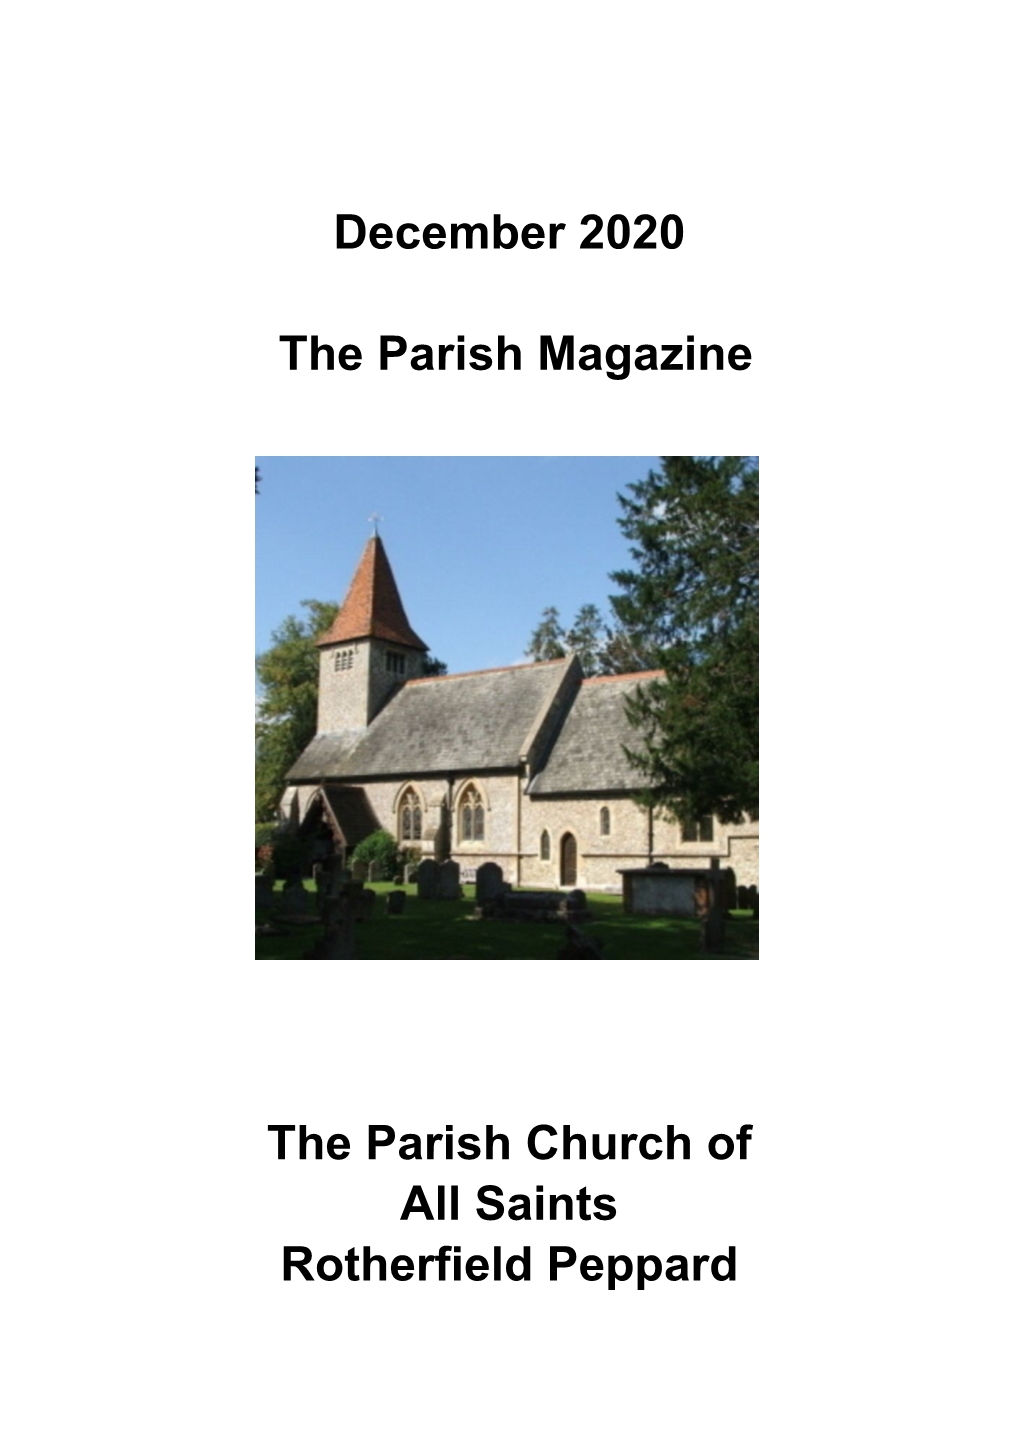 December 2020 the Parish Magazine the Parish Church of All Saints